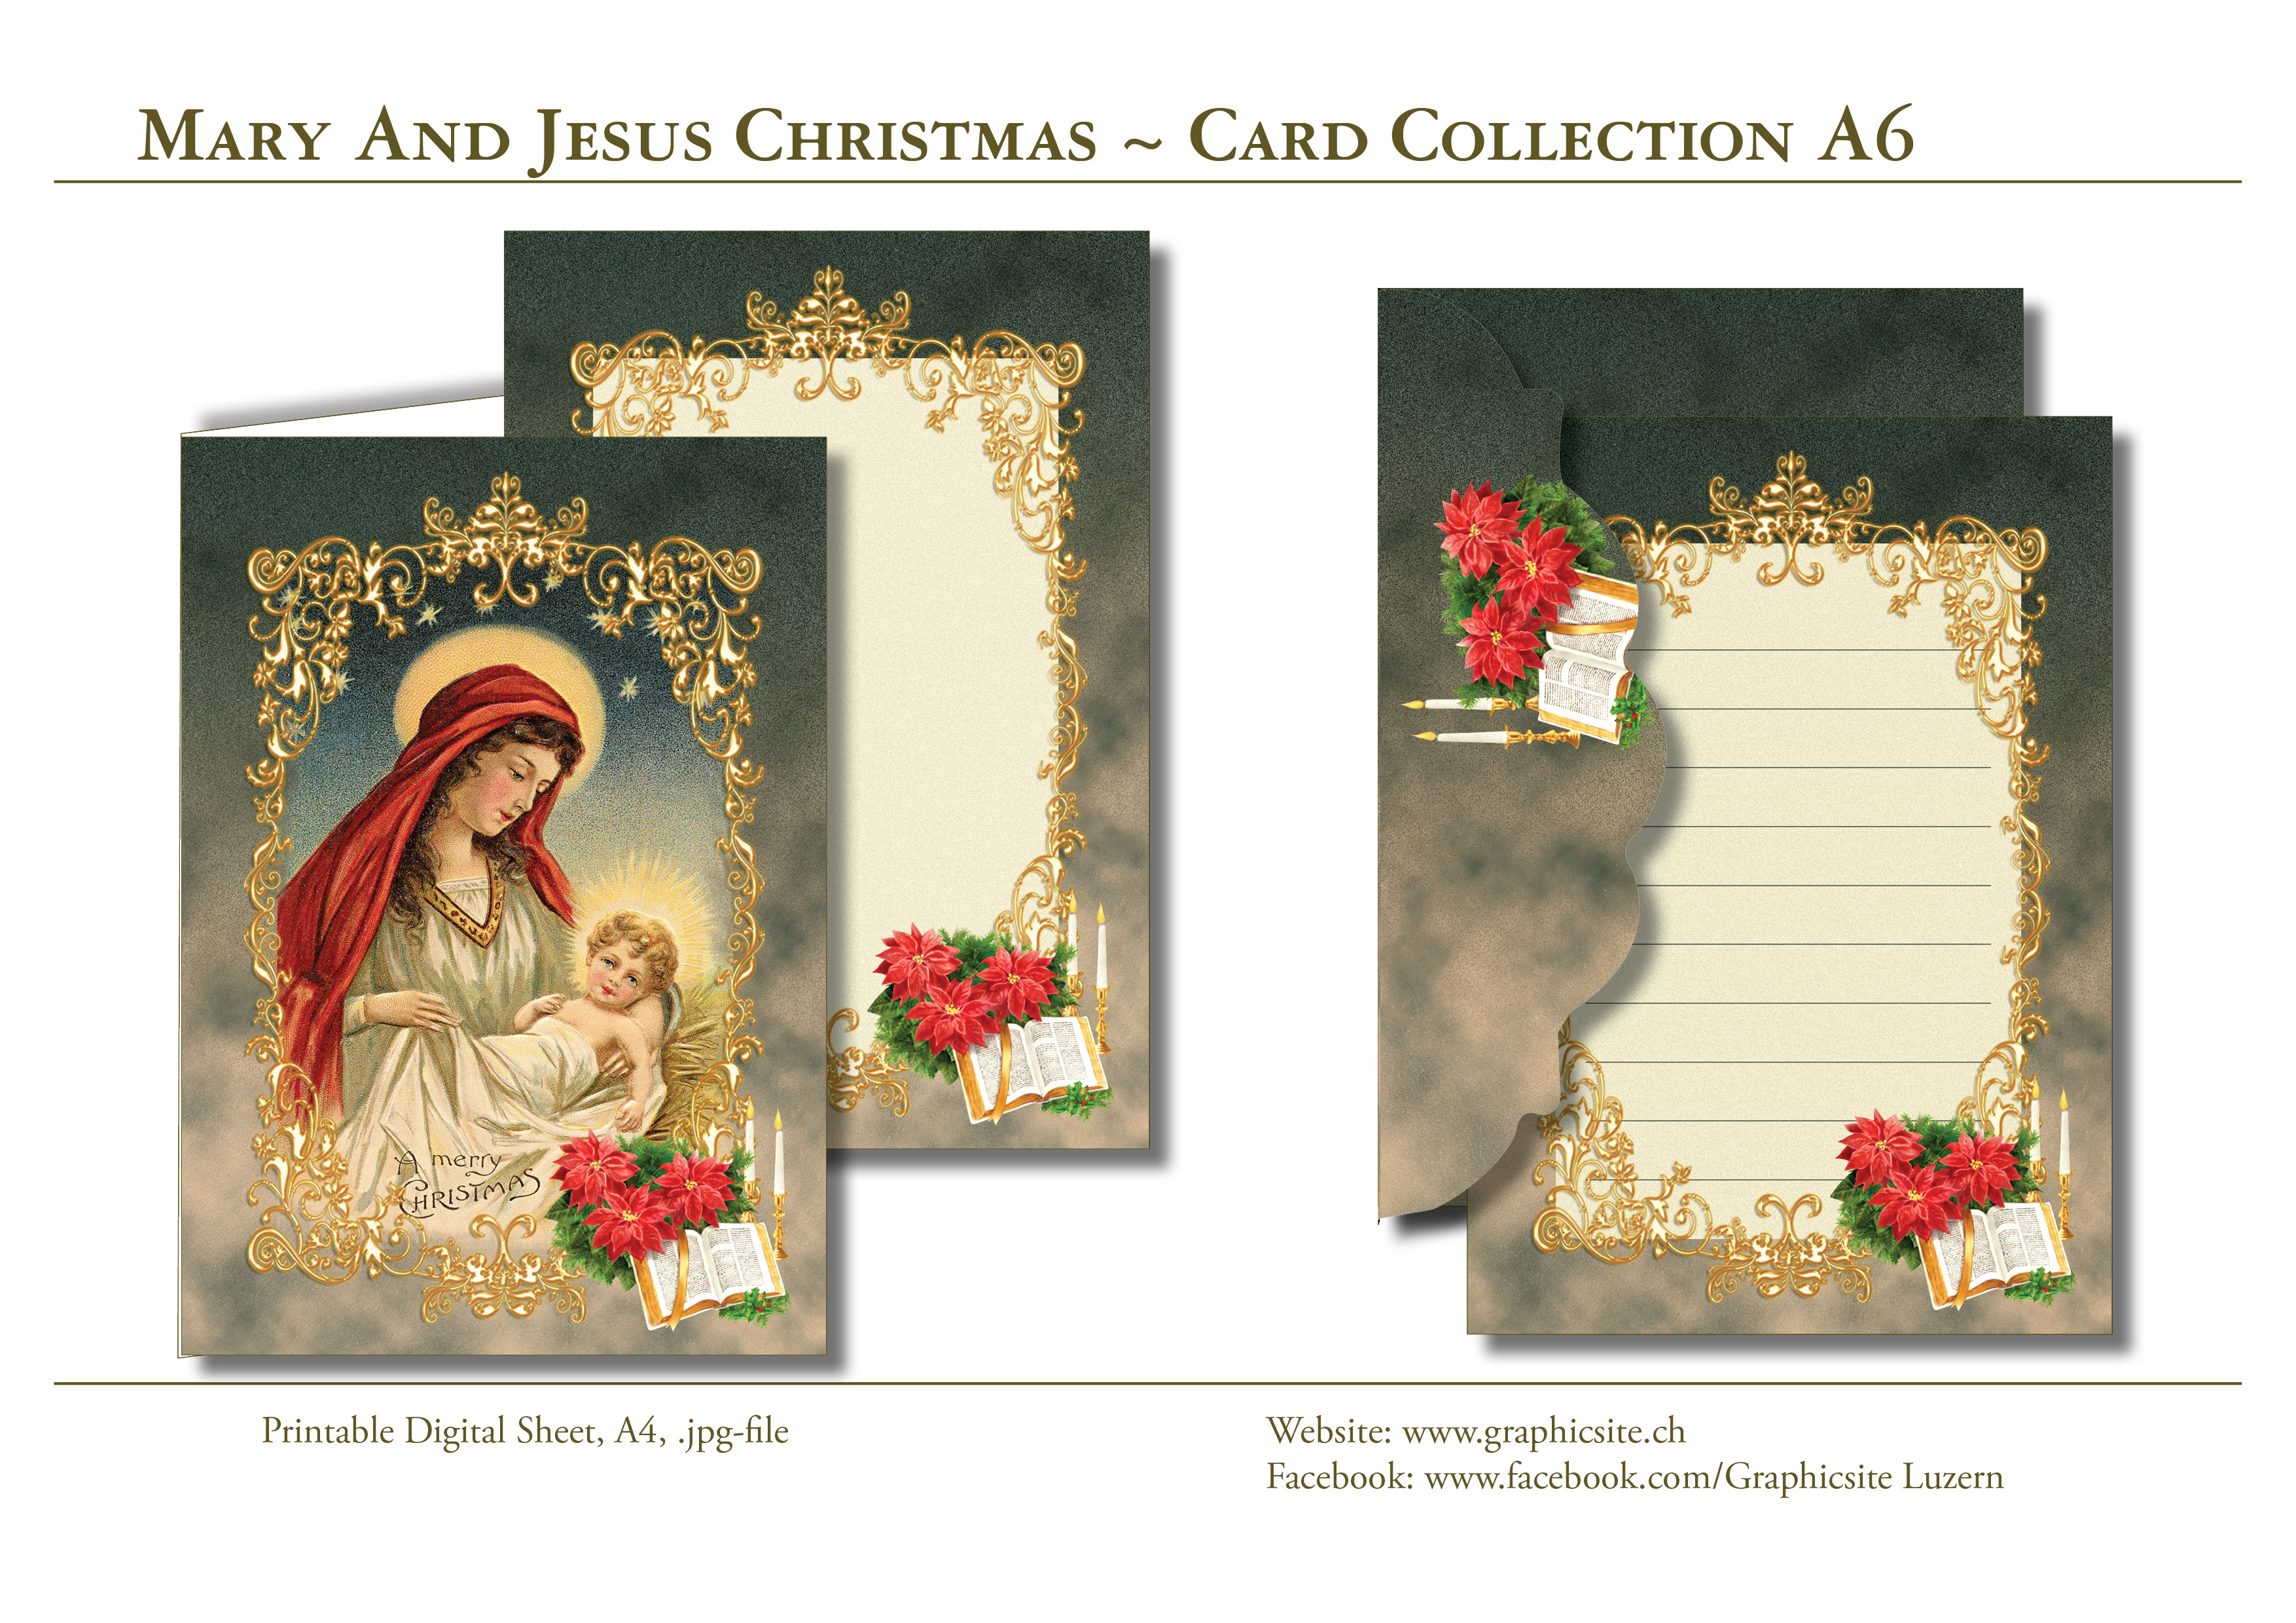 Printable Digital Sheets - Greeting Cards, Postcards, Christmas, Graphic Design, Luzern,